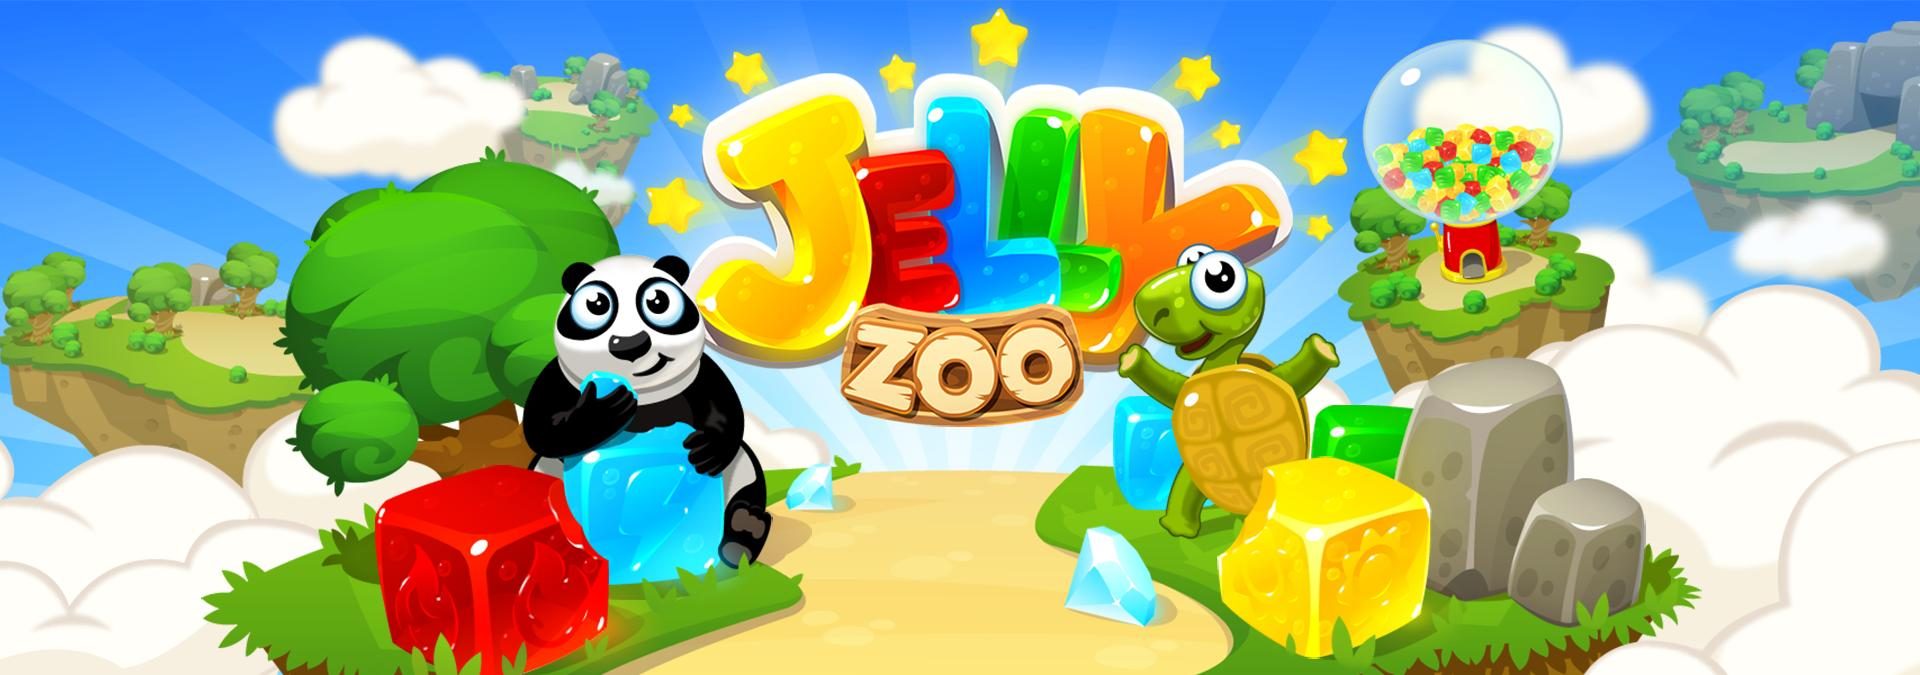 Jelly Zoo